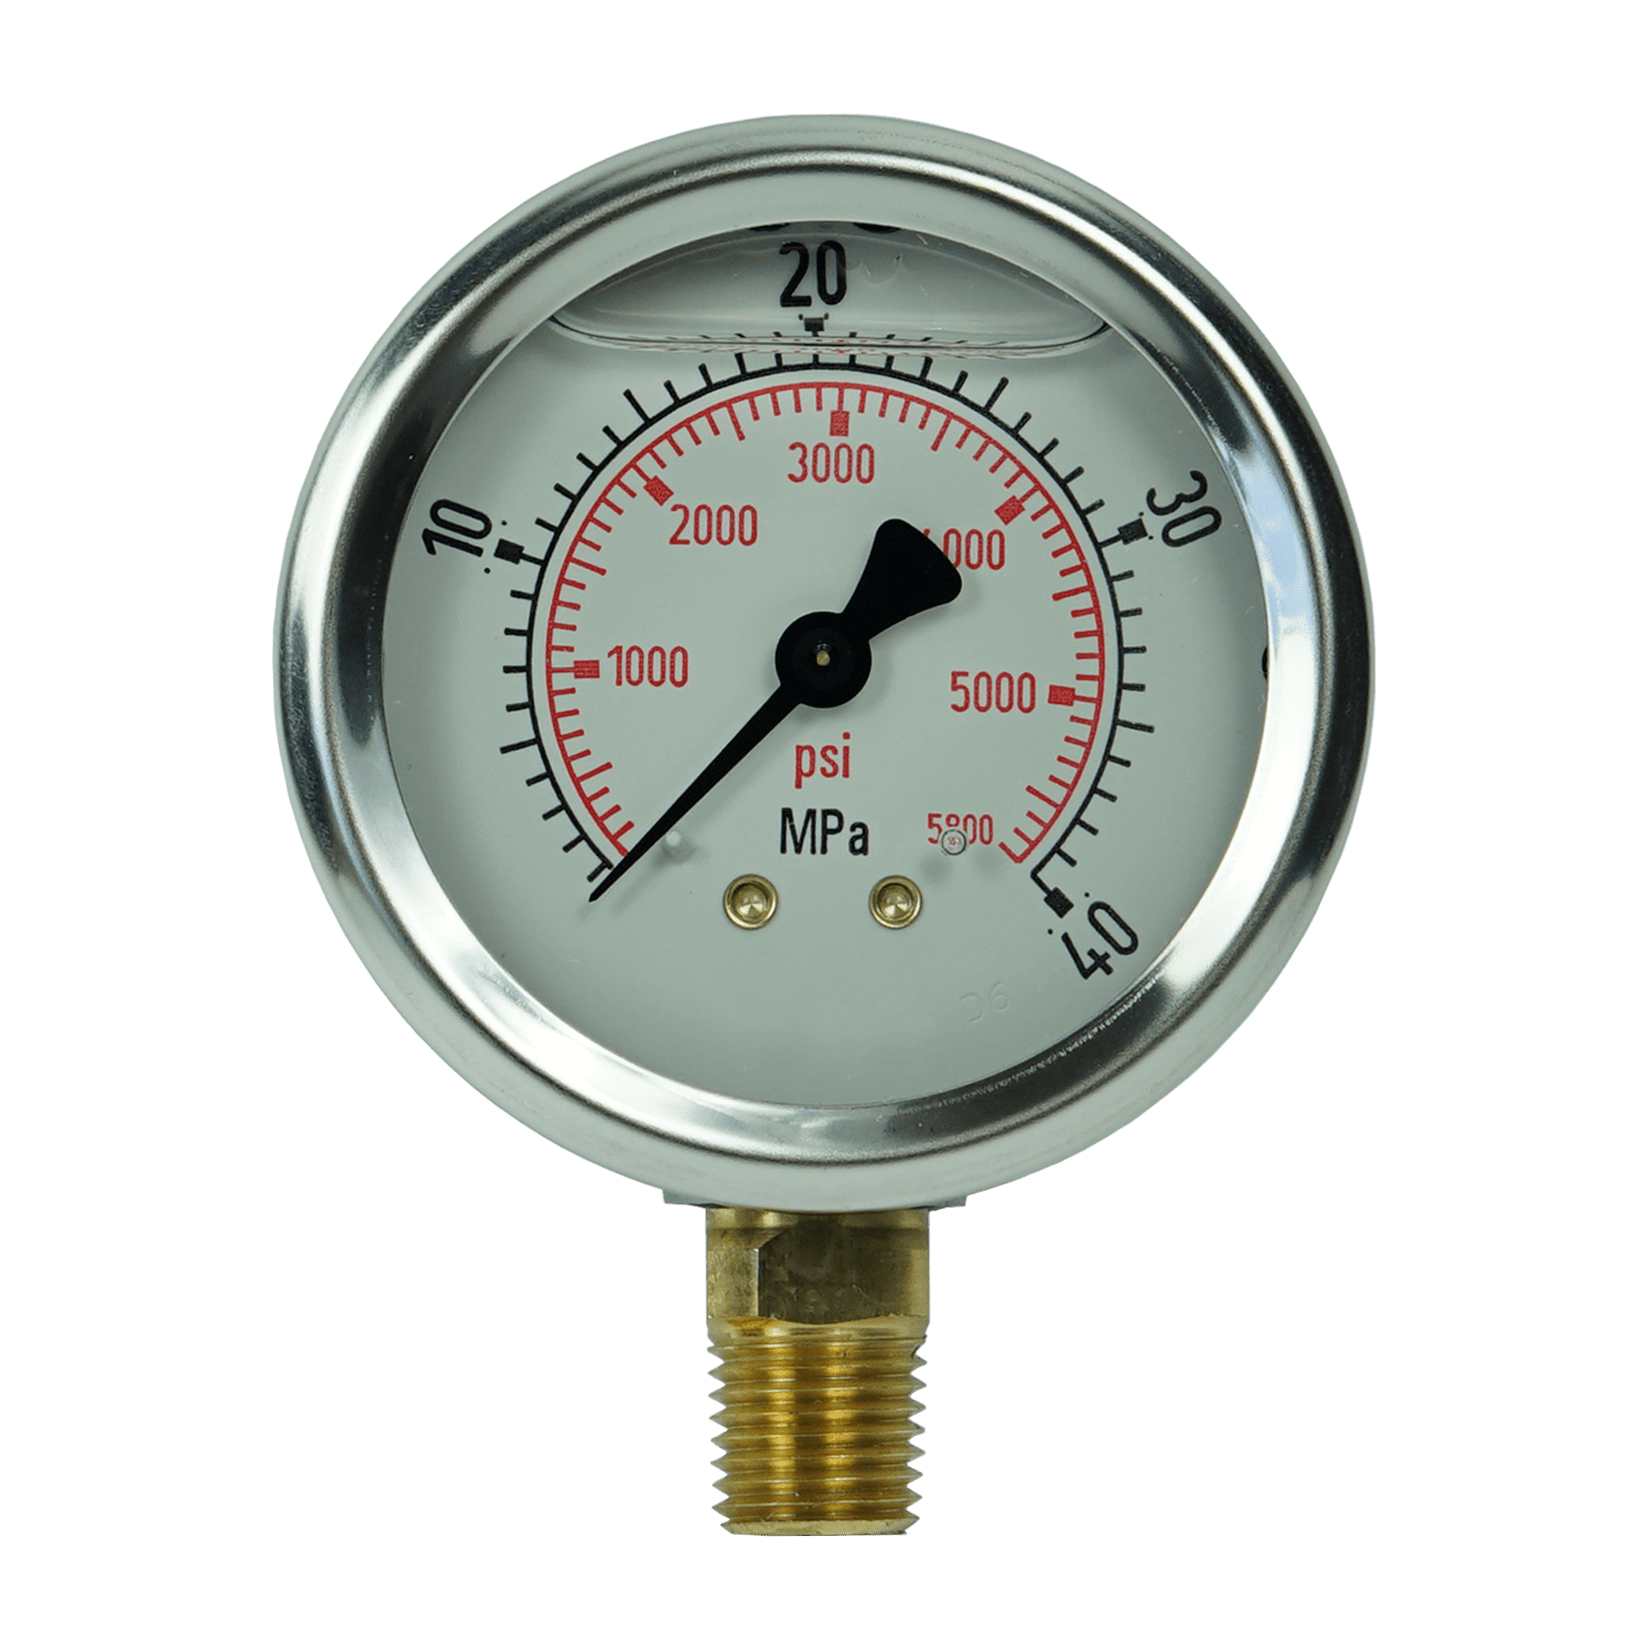 Pressure Test Products Pressure Gauge 40 MPa Hydracheck